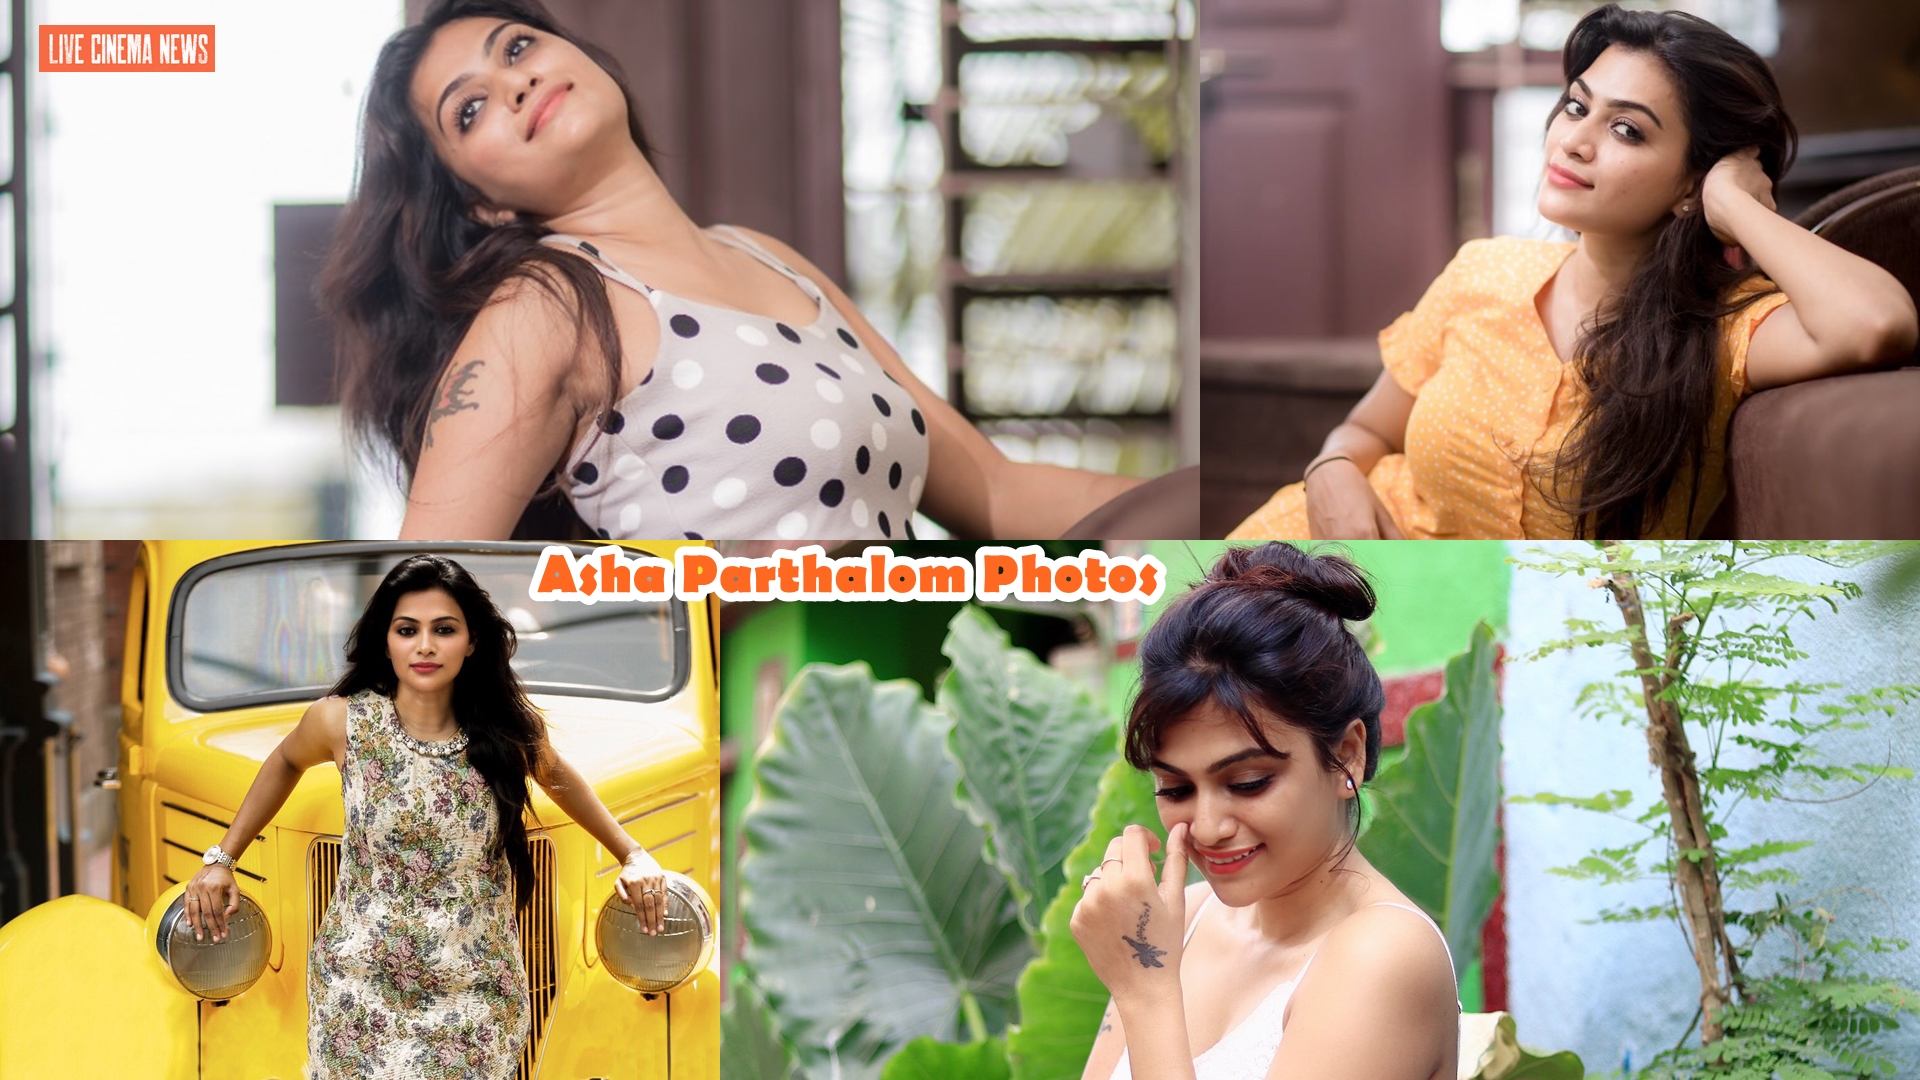 Asha Parthalom Photos